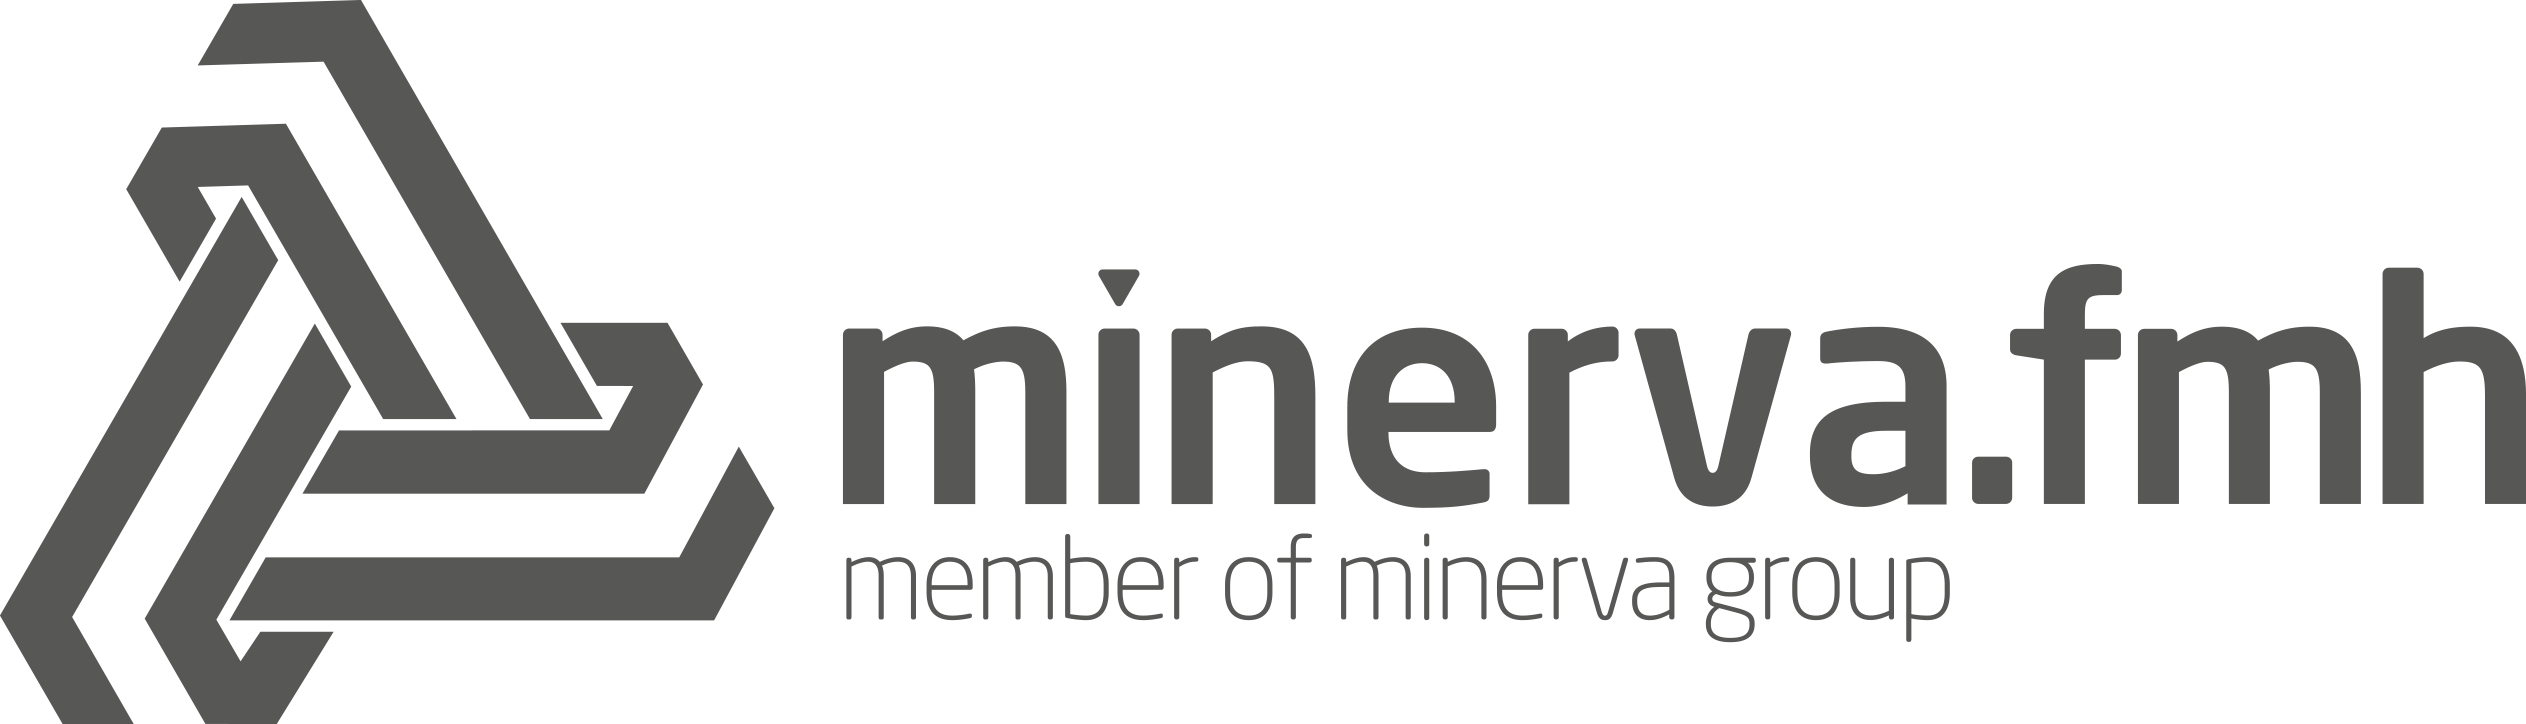 Minerva Oil Company Logo - The Group - Minerva